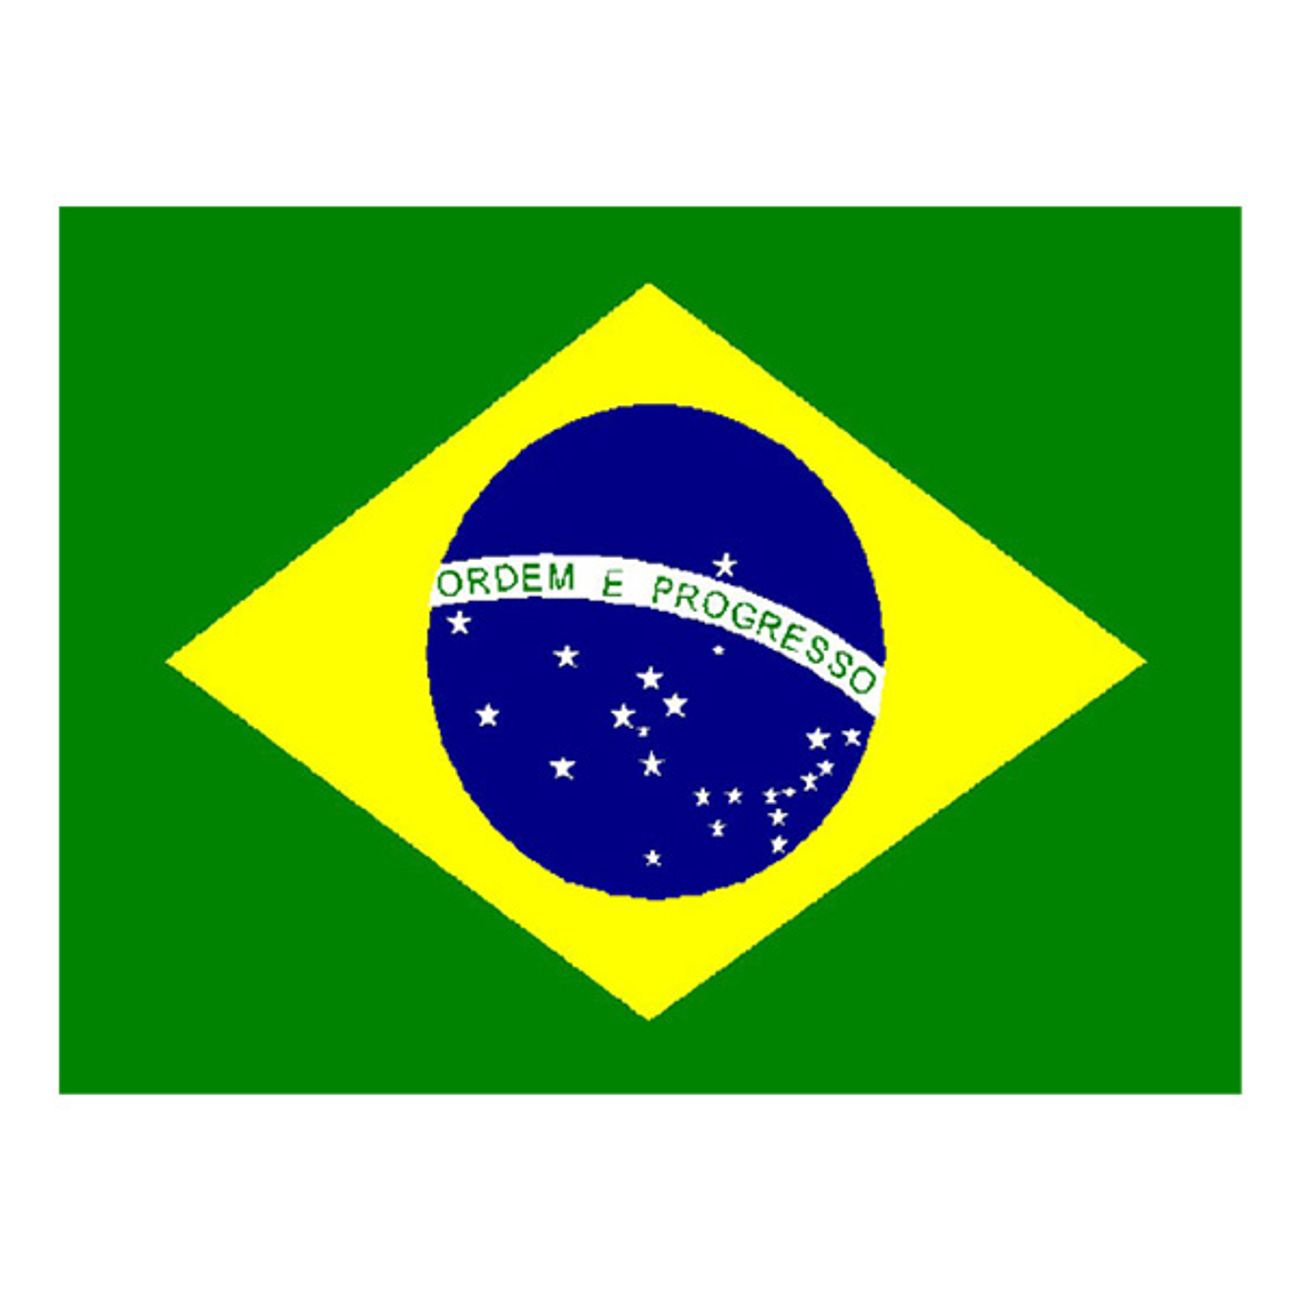 flagga-brasilien-1